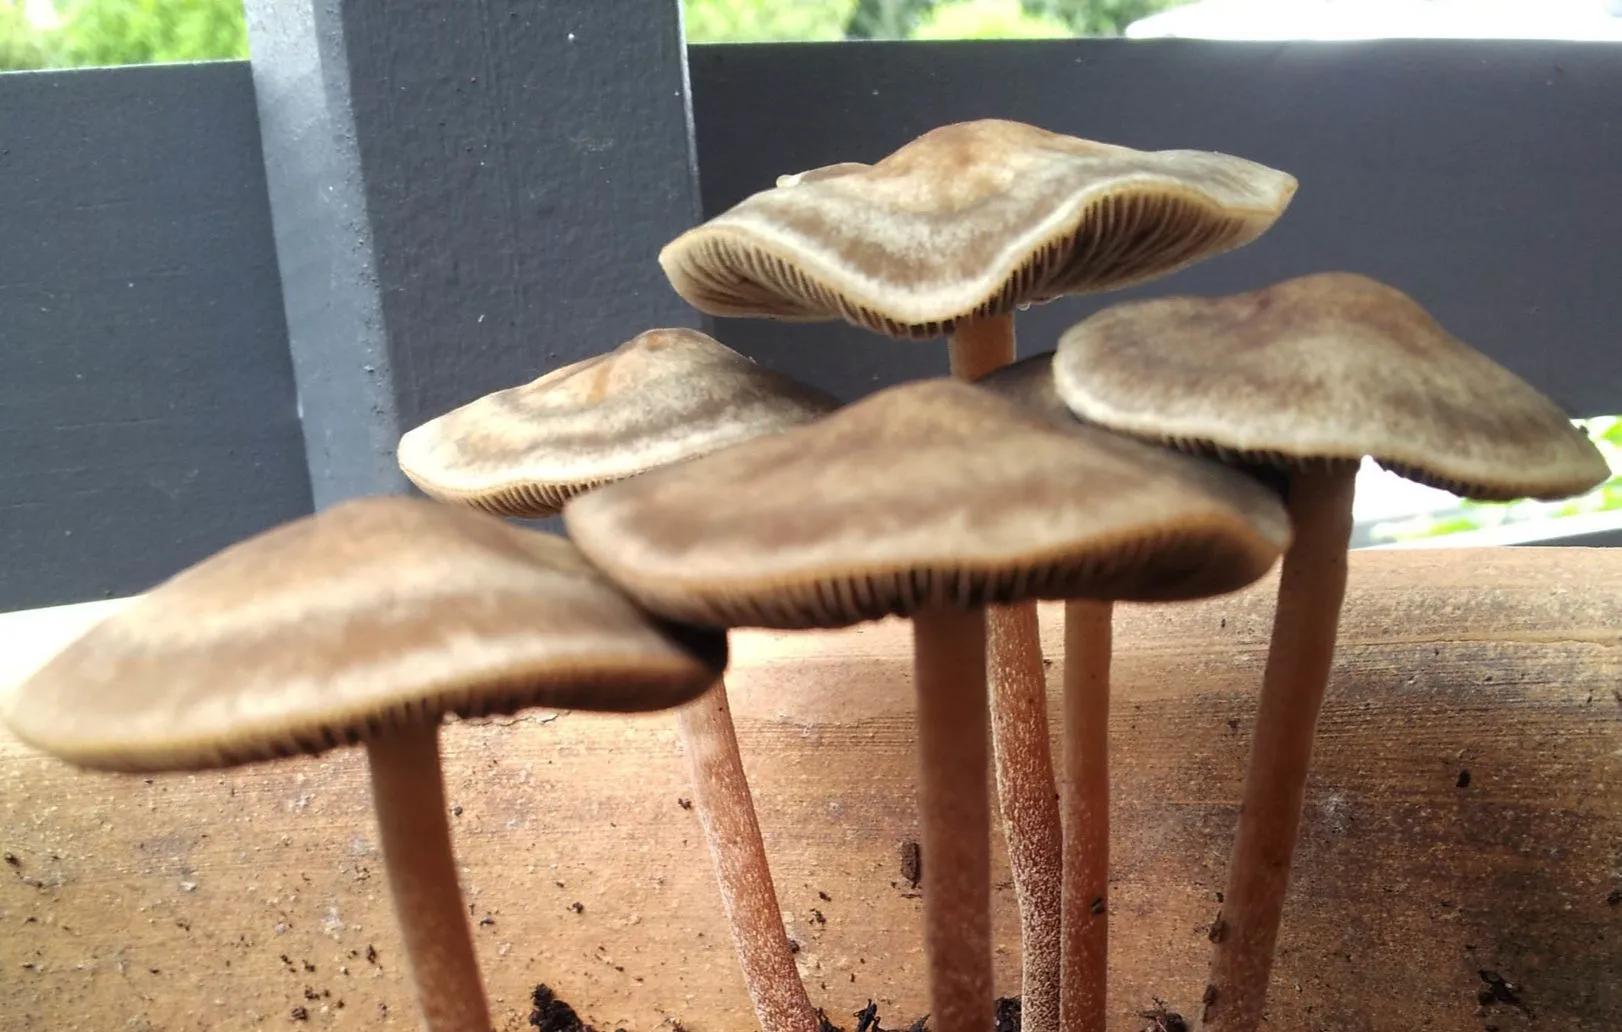 Homegrown Mushrooms